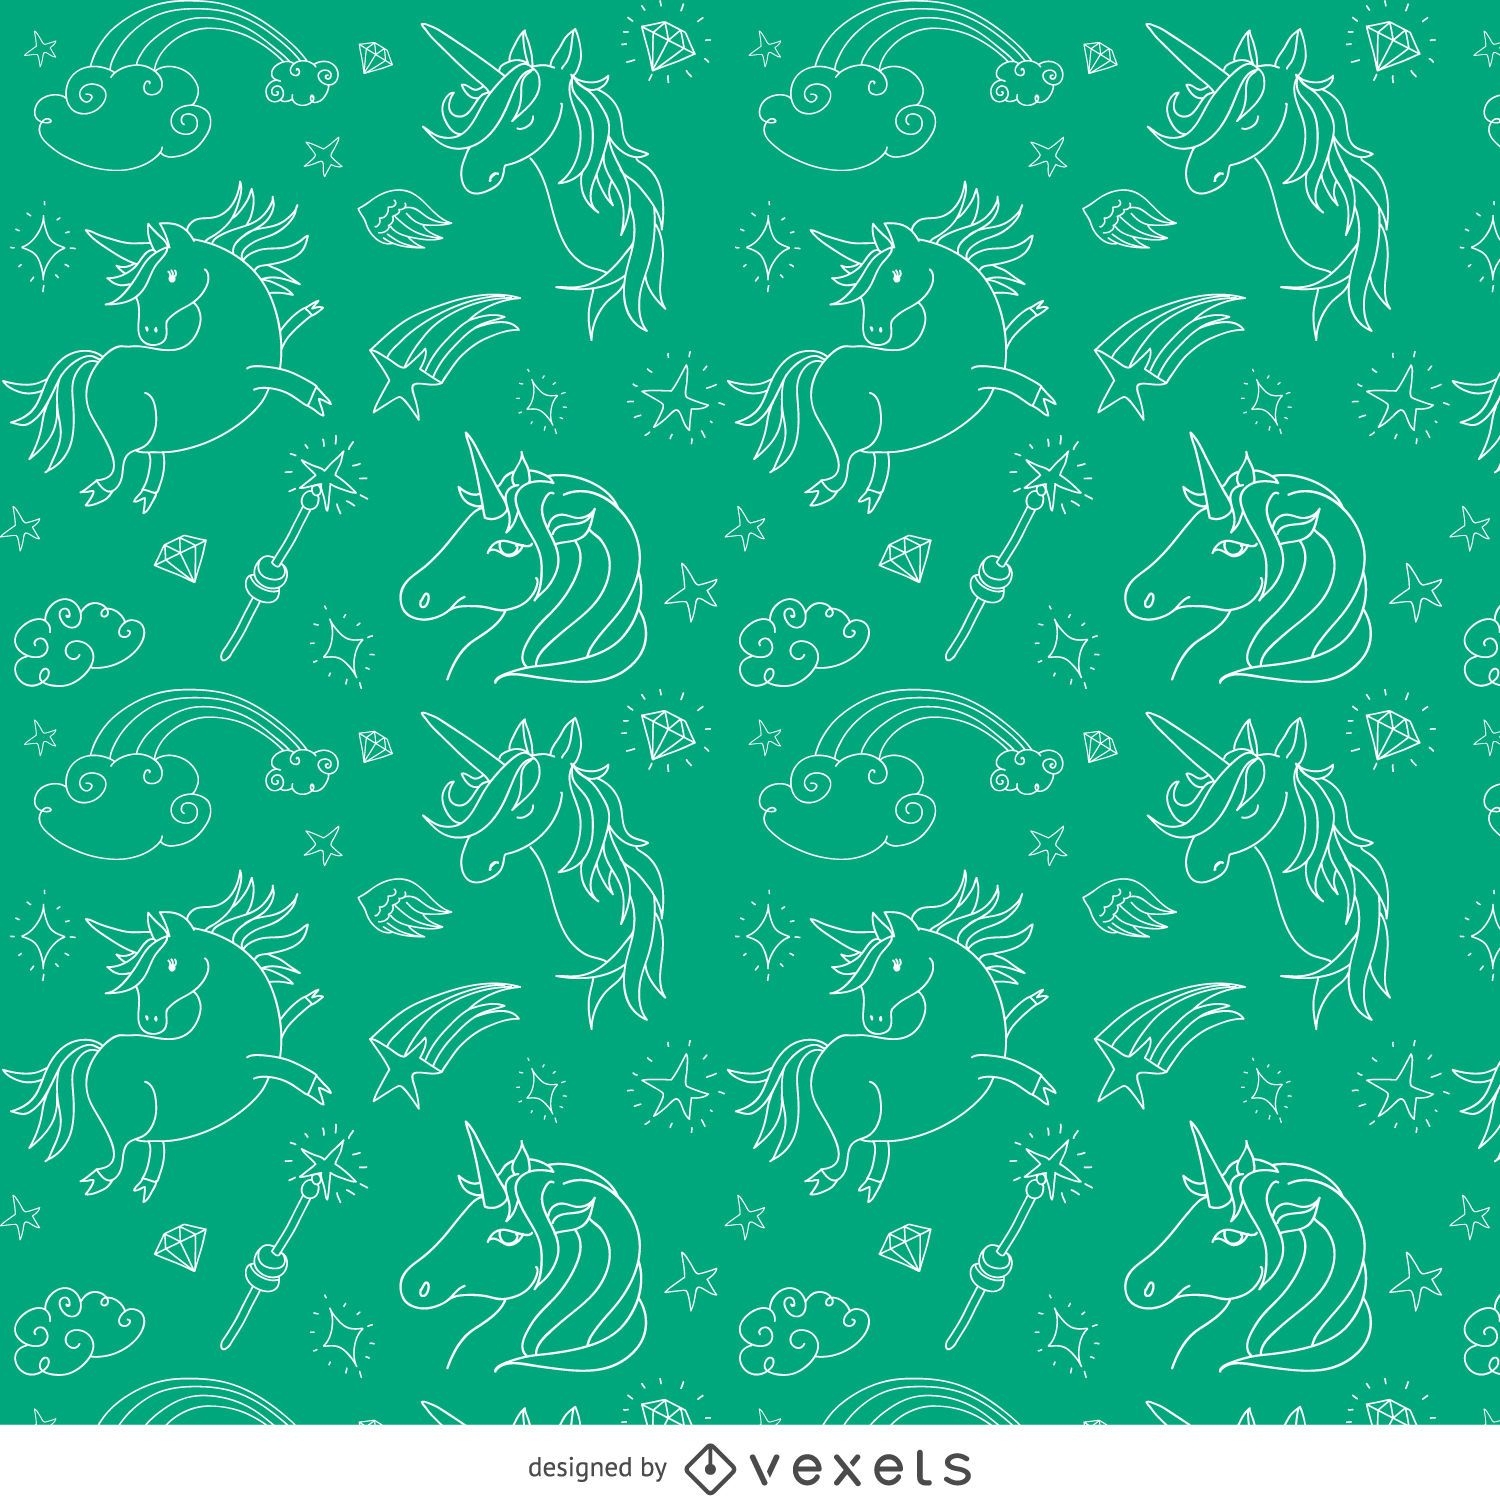 Illustrated unicorn pattern